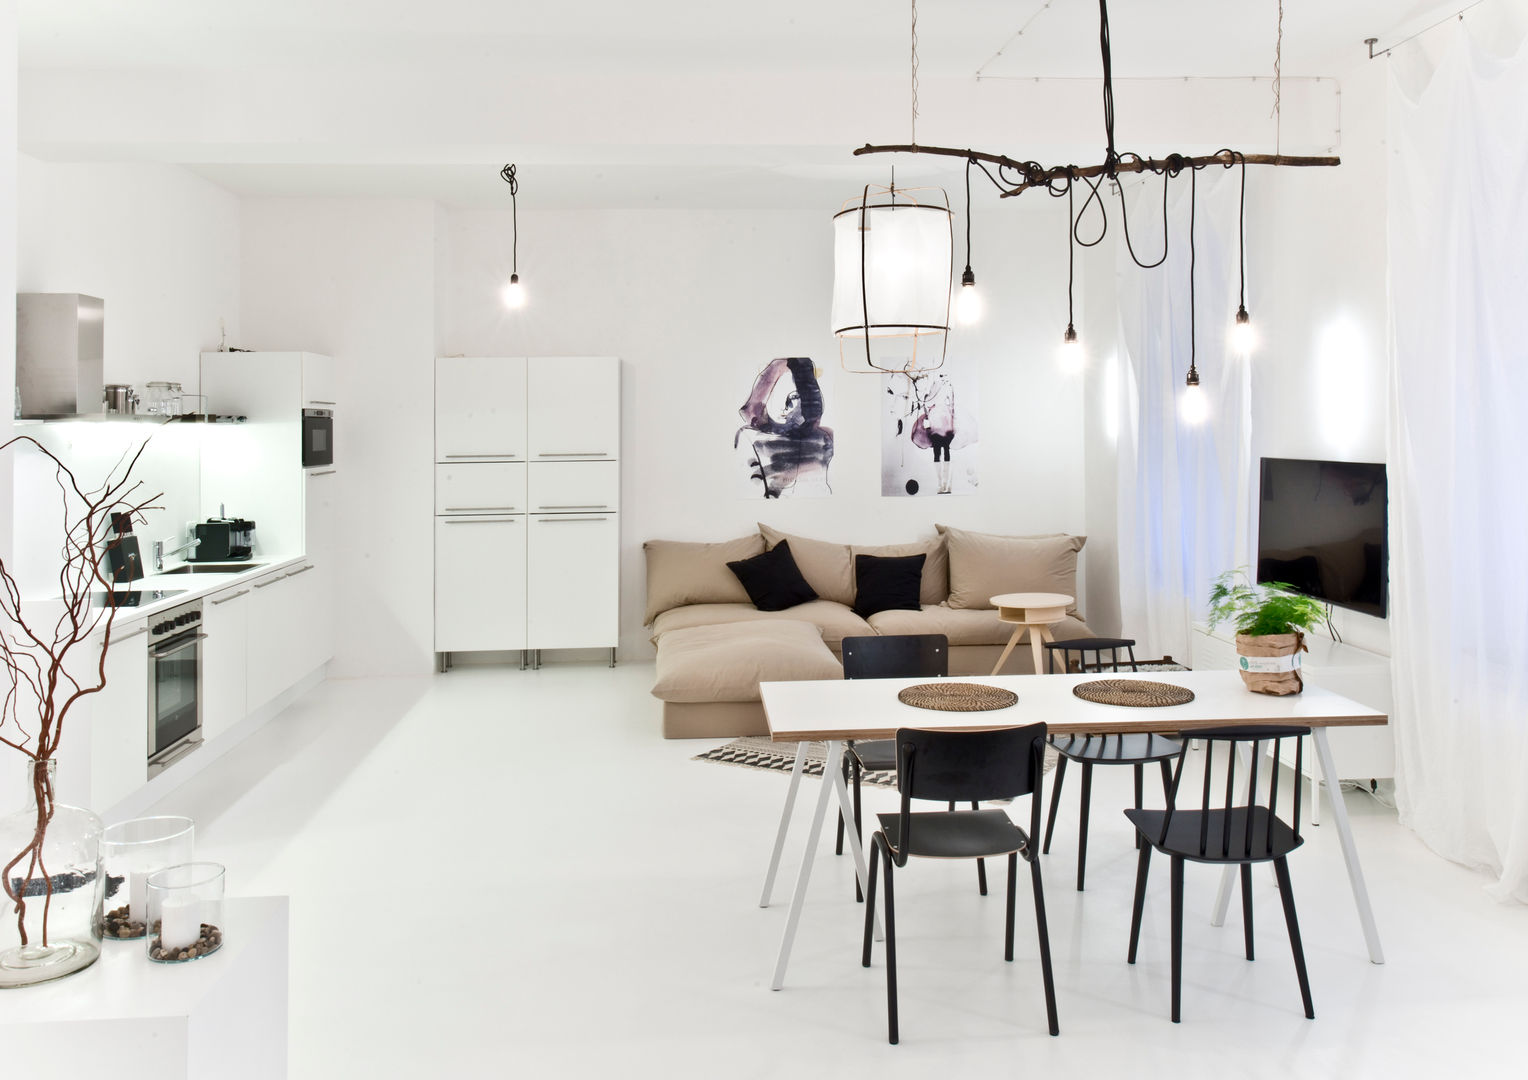 70 qm Loft, freudenspiel - Interior Design freudenspiel - Interior Design Ruang Keluarga Gaya Eklektik